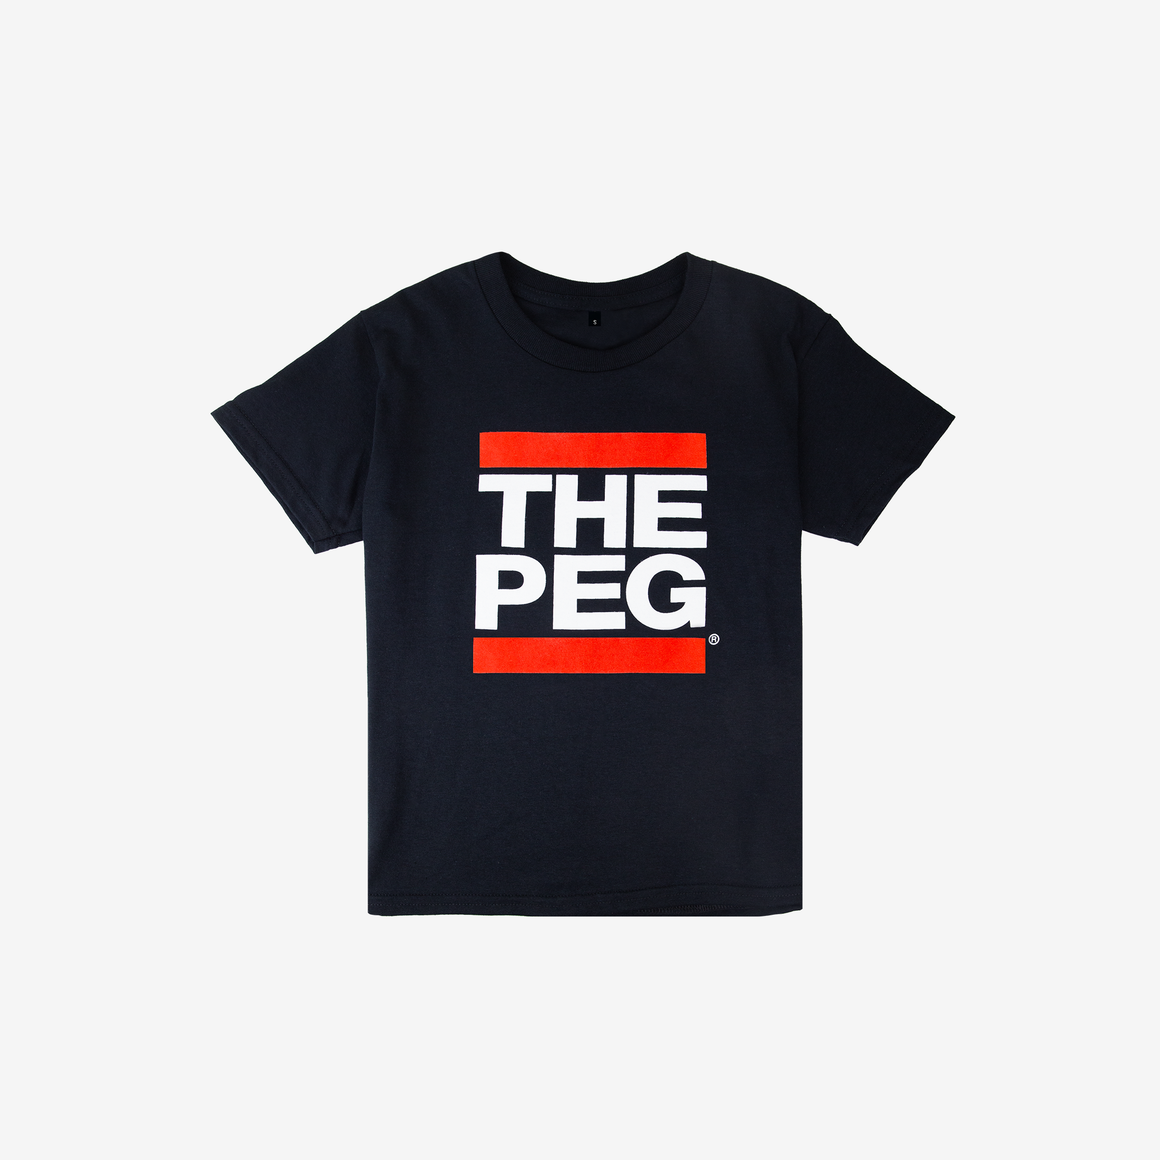 The Peg® Youth Tee Shirt Tee Shirt (Original Black)